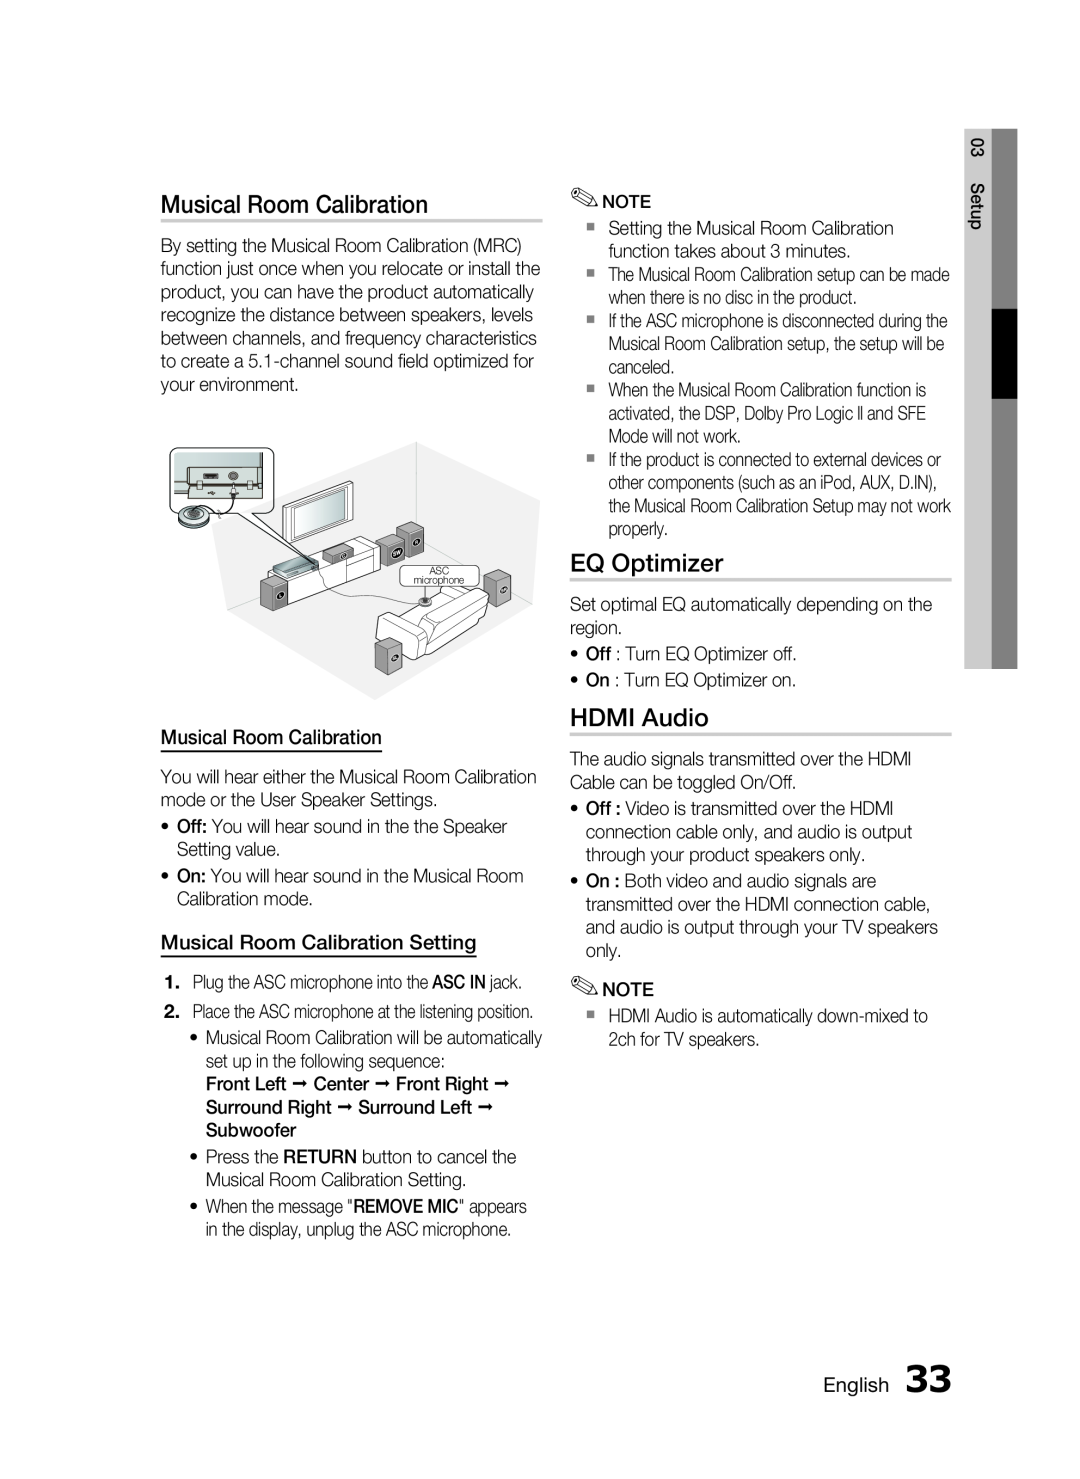 Samsung AH68-02258S, HT-C5500 user manual EQ Optimizer, HDMI Audio, Musical Room Calibration Setting, English 